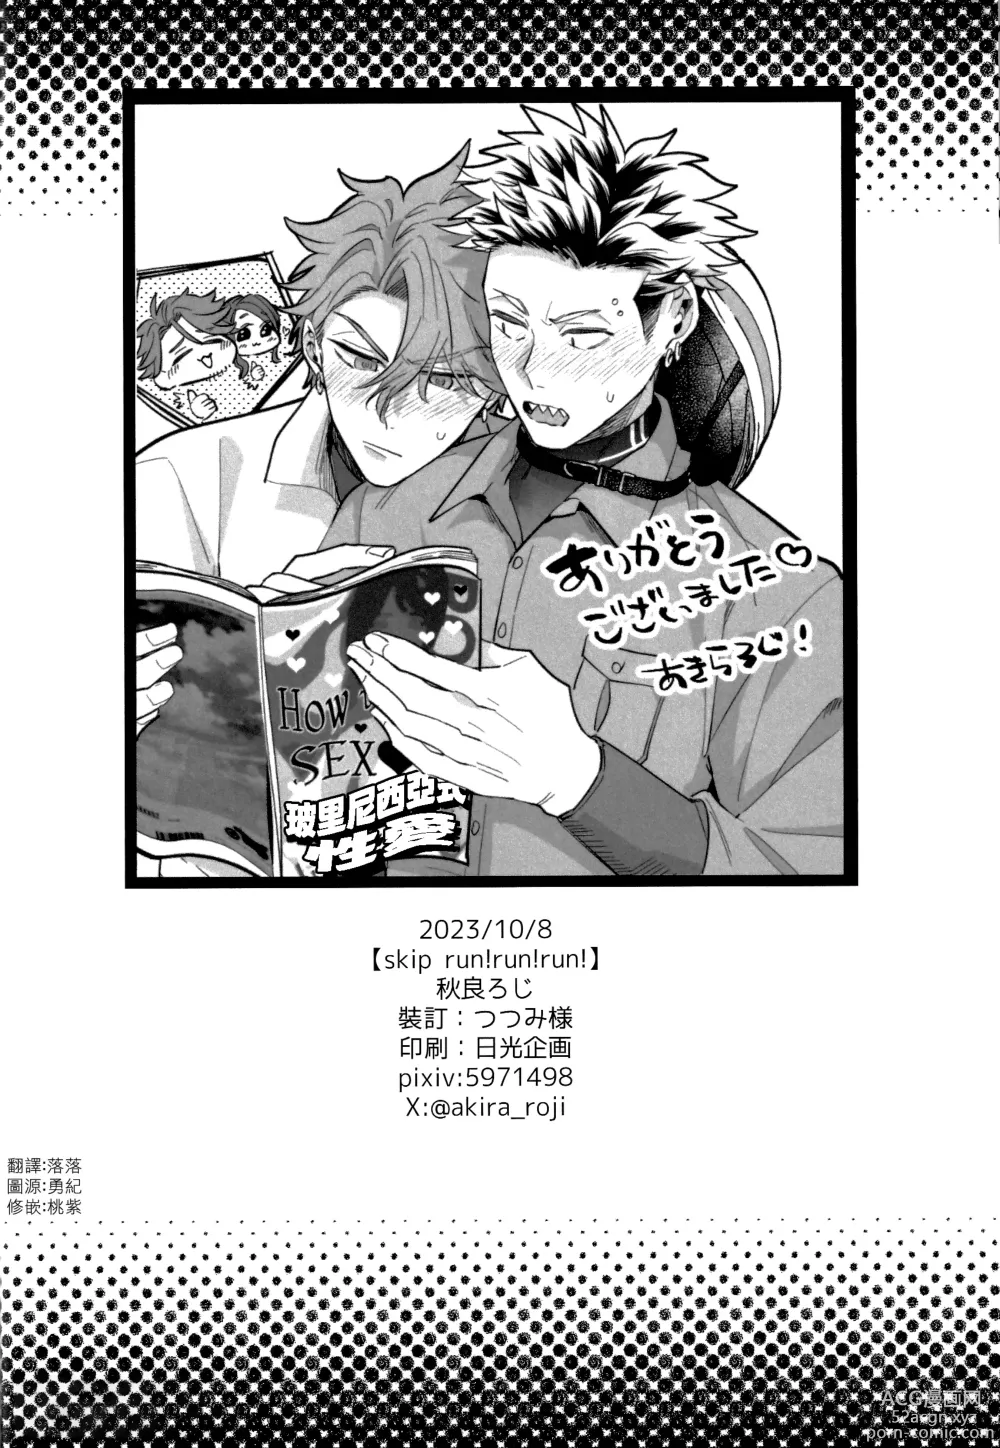 Page 29 of doujinshi skip run!run!run! (uncensored)